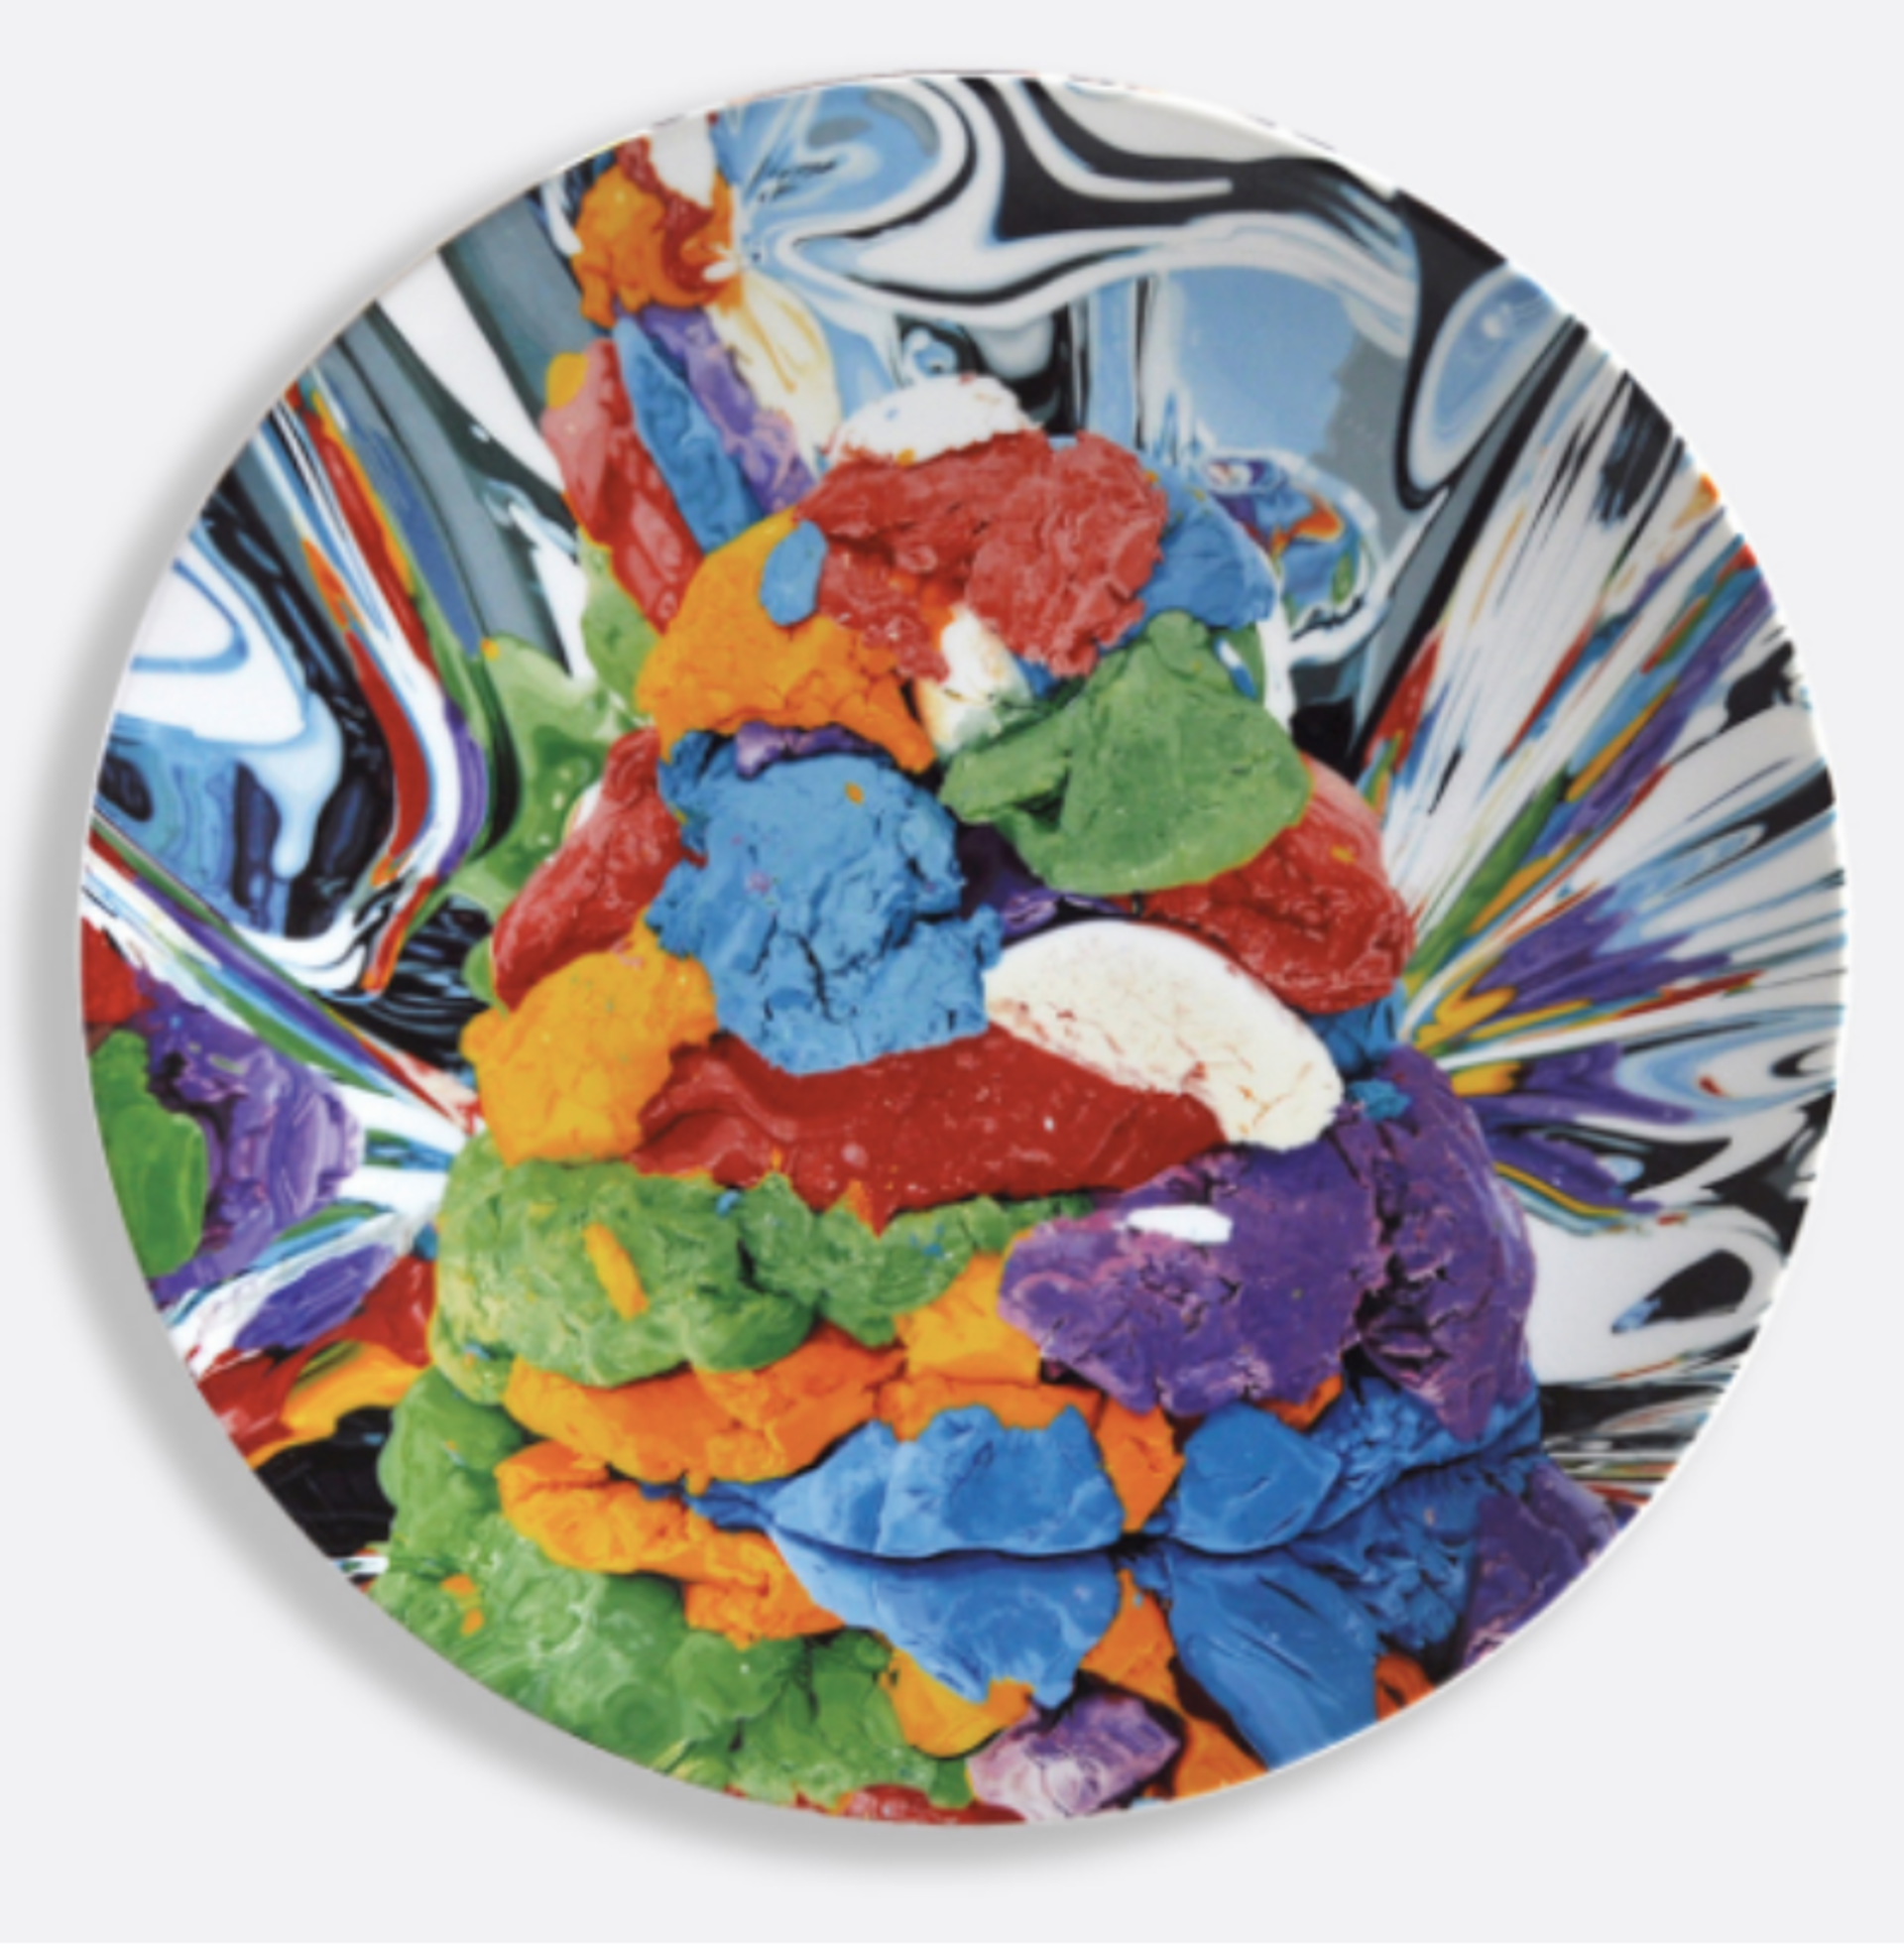 Play - Doh - Coupe service plate by Jeff Koons x Bernardaud